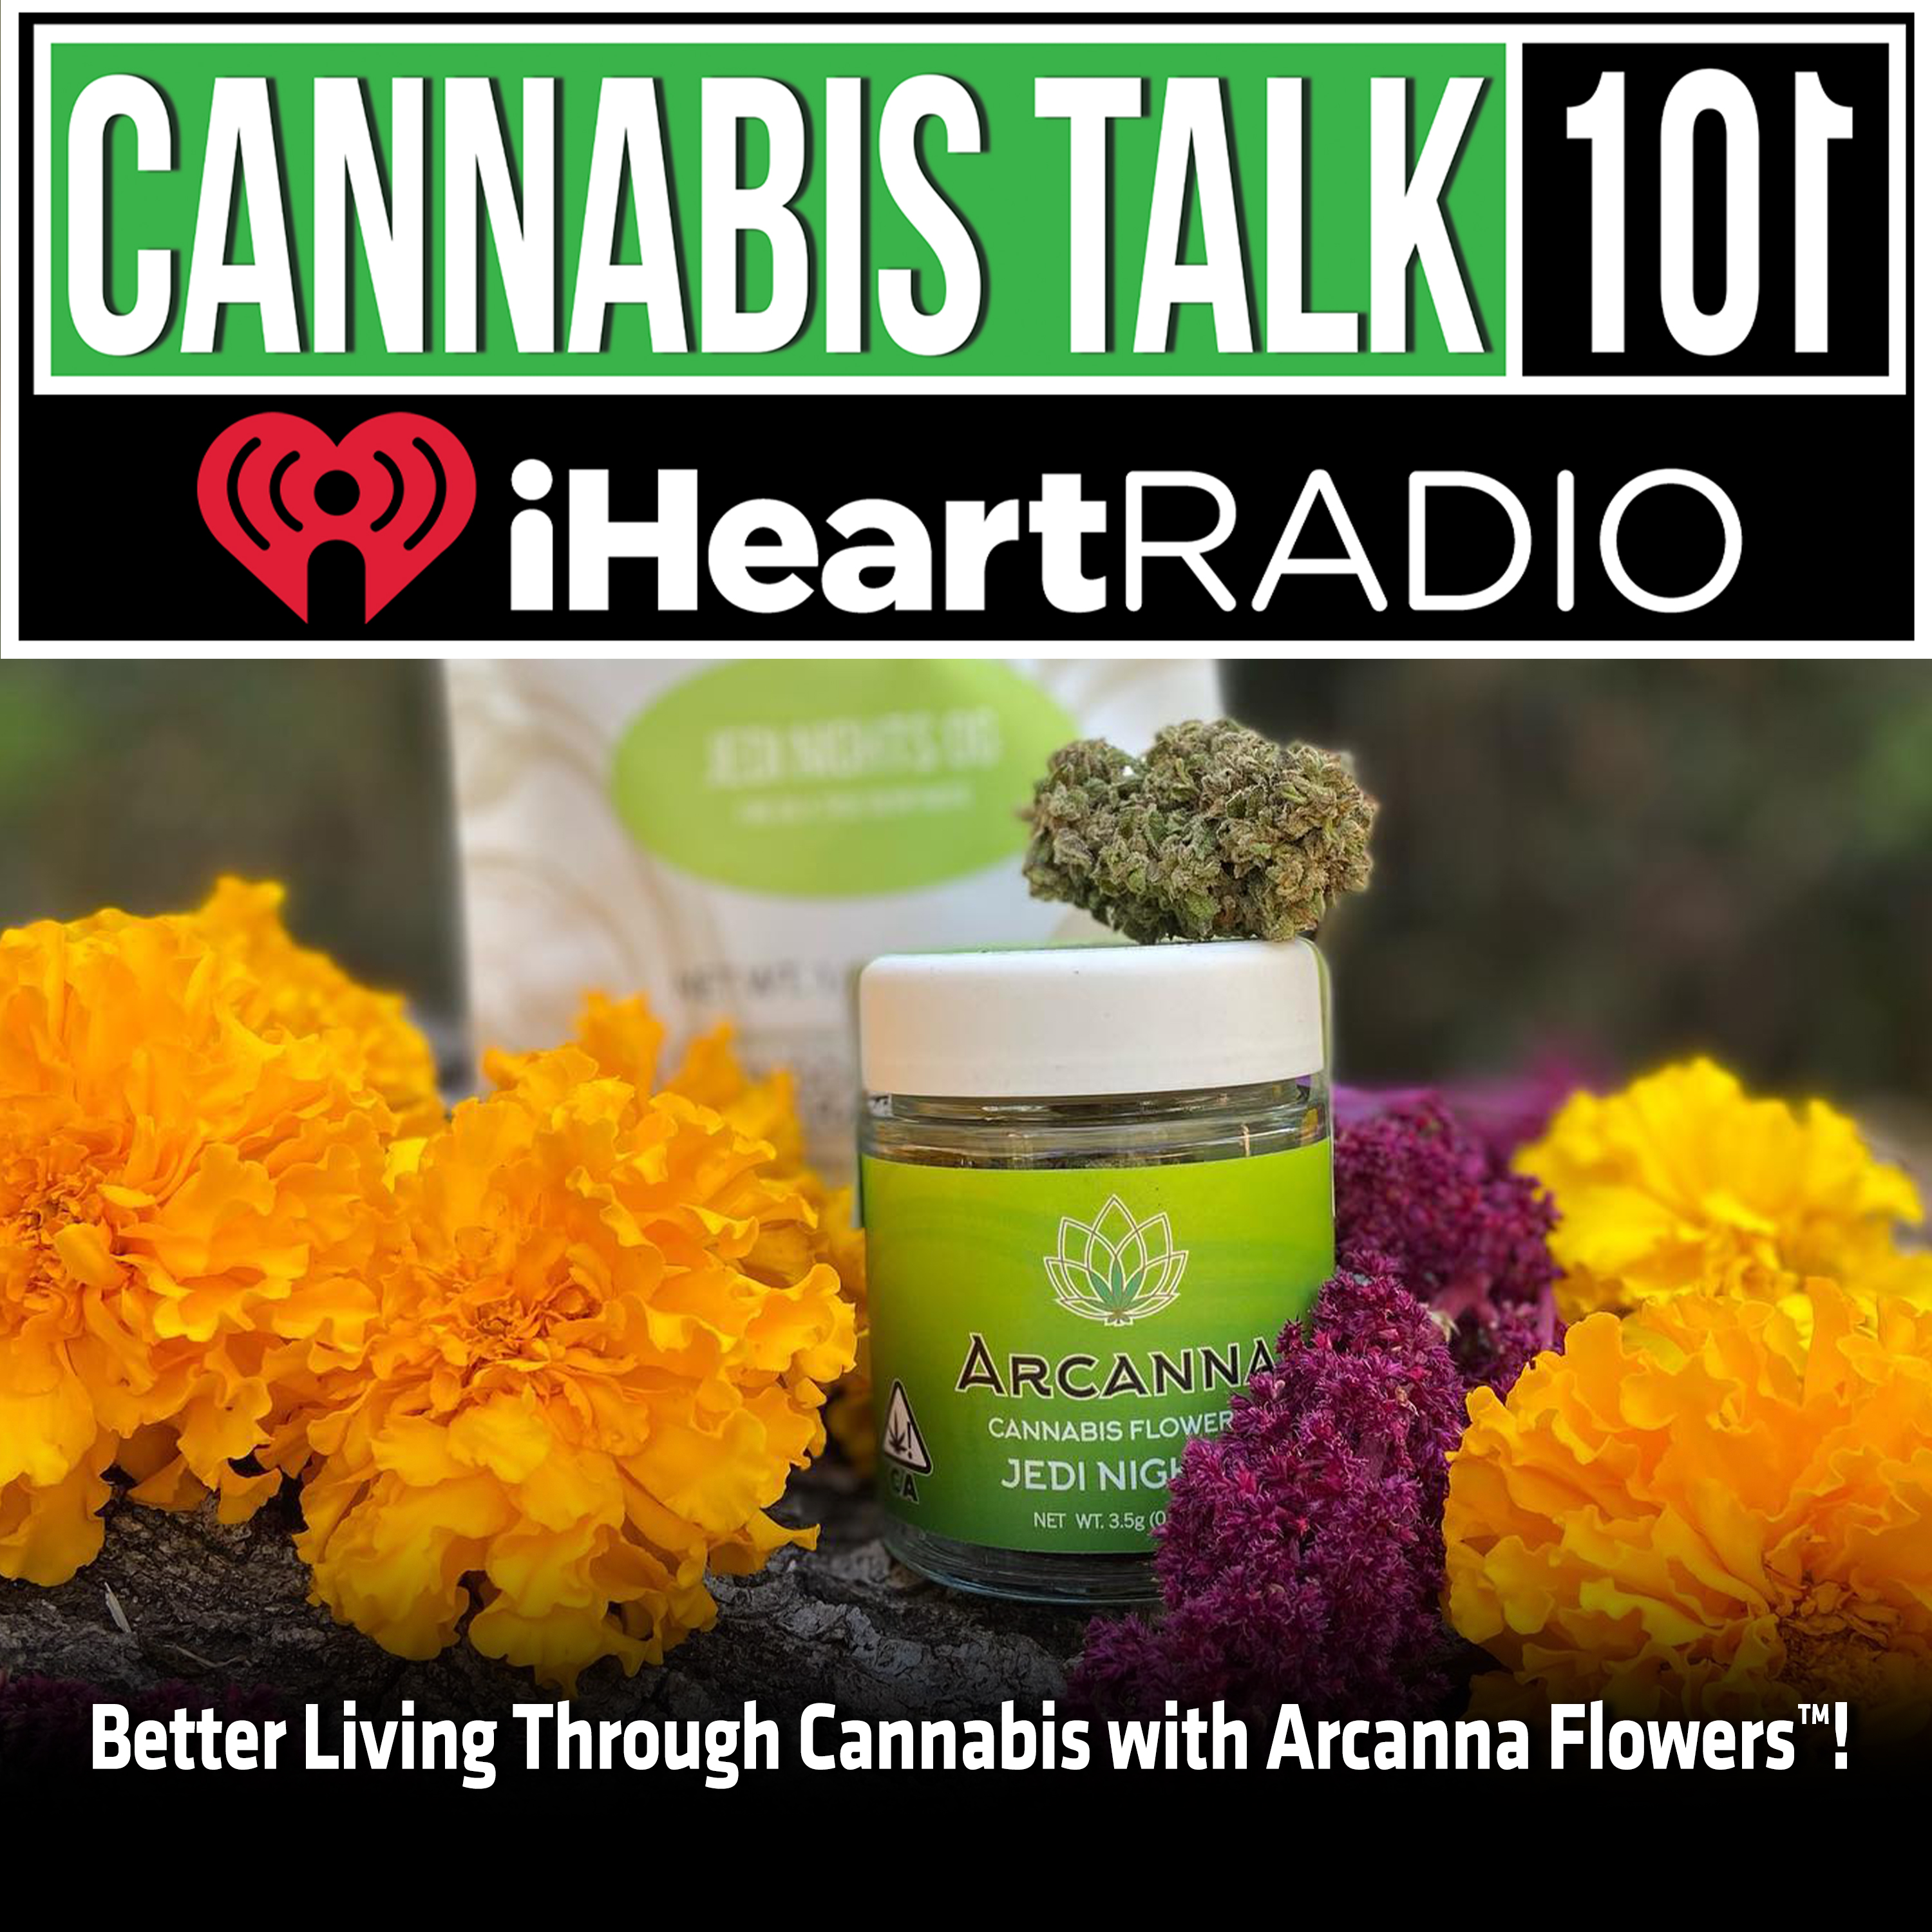 Better Living Through Cannabis with Arcanna Flowers™!